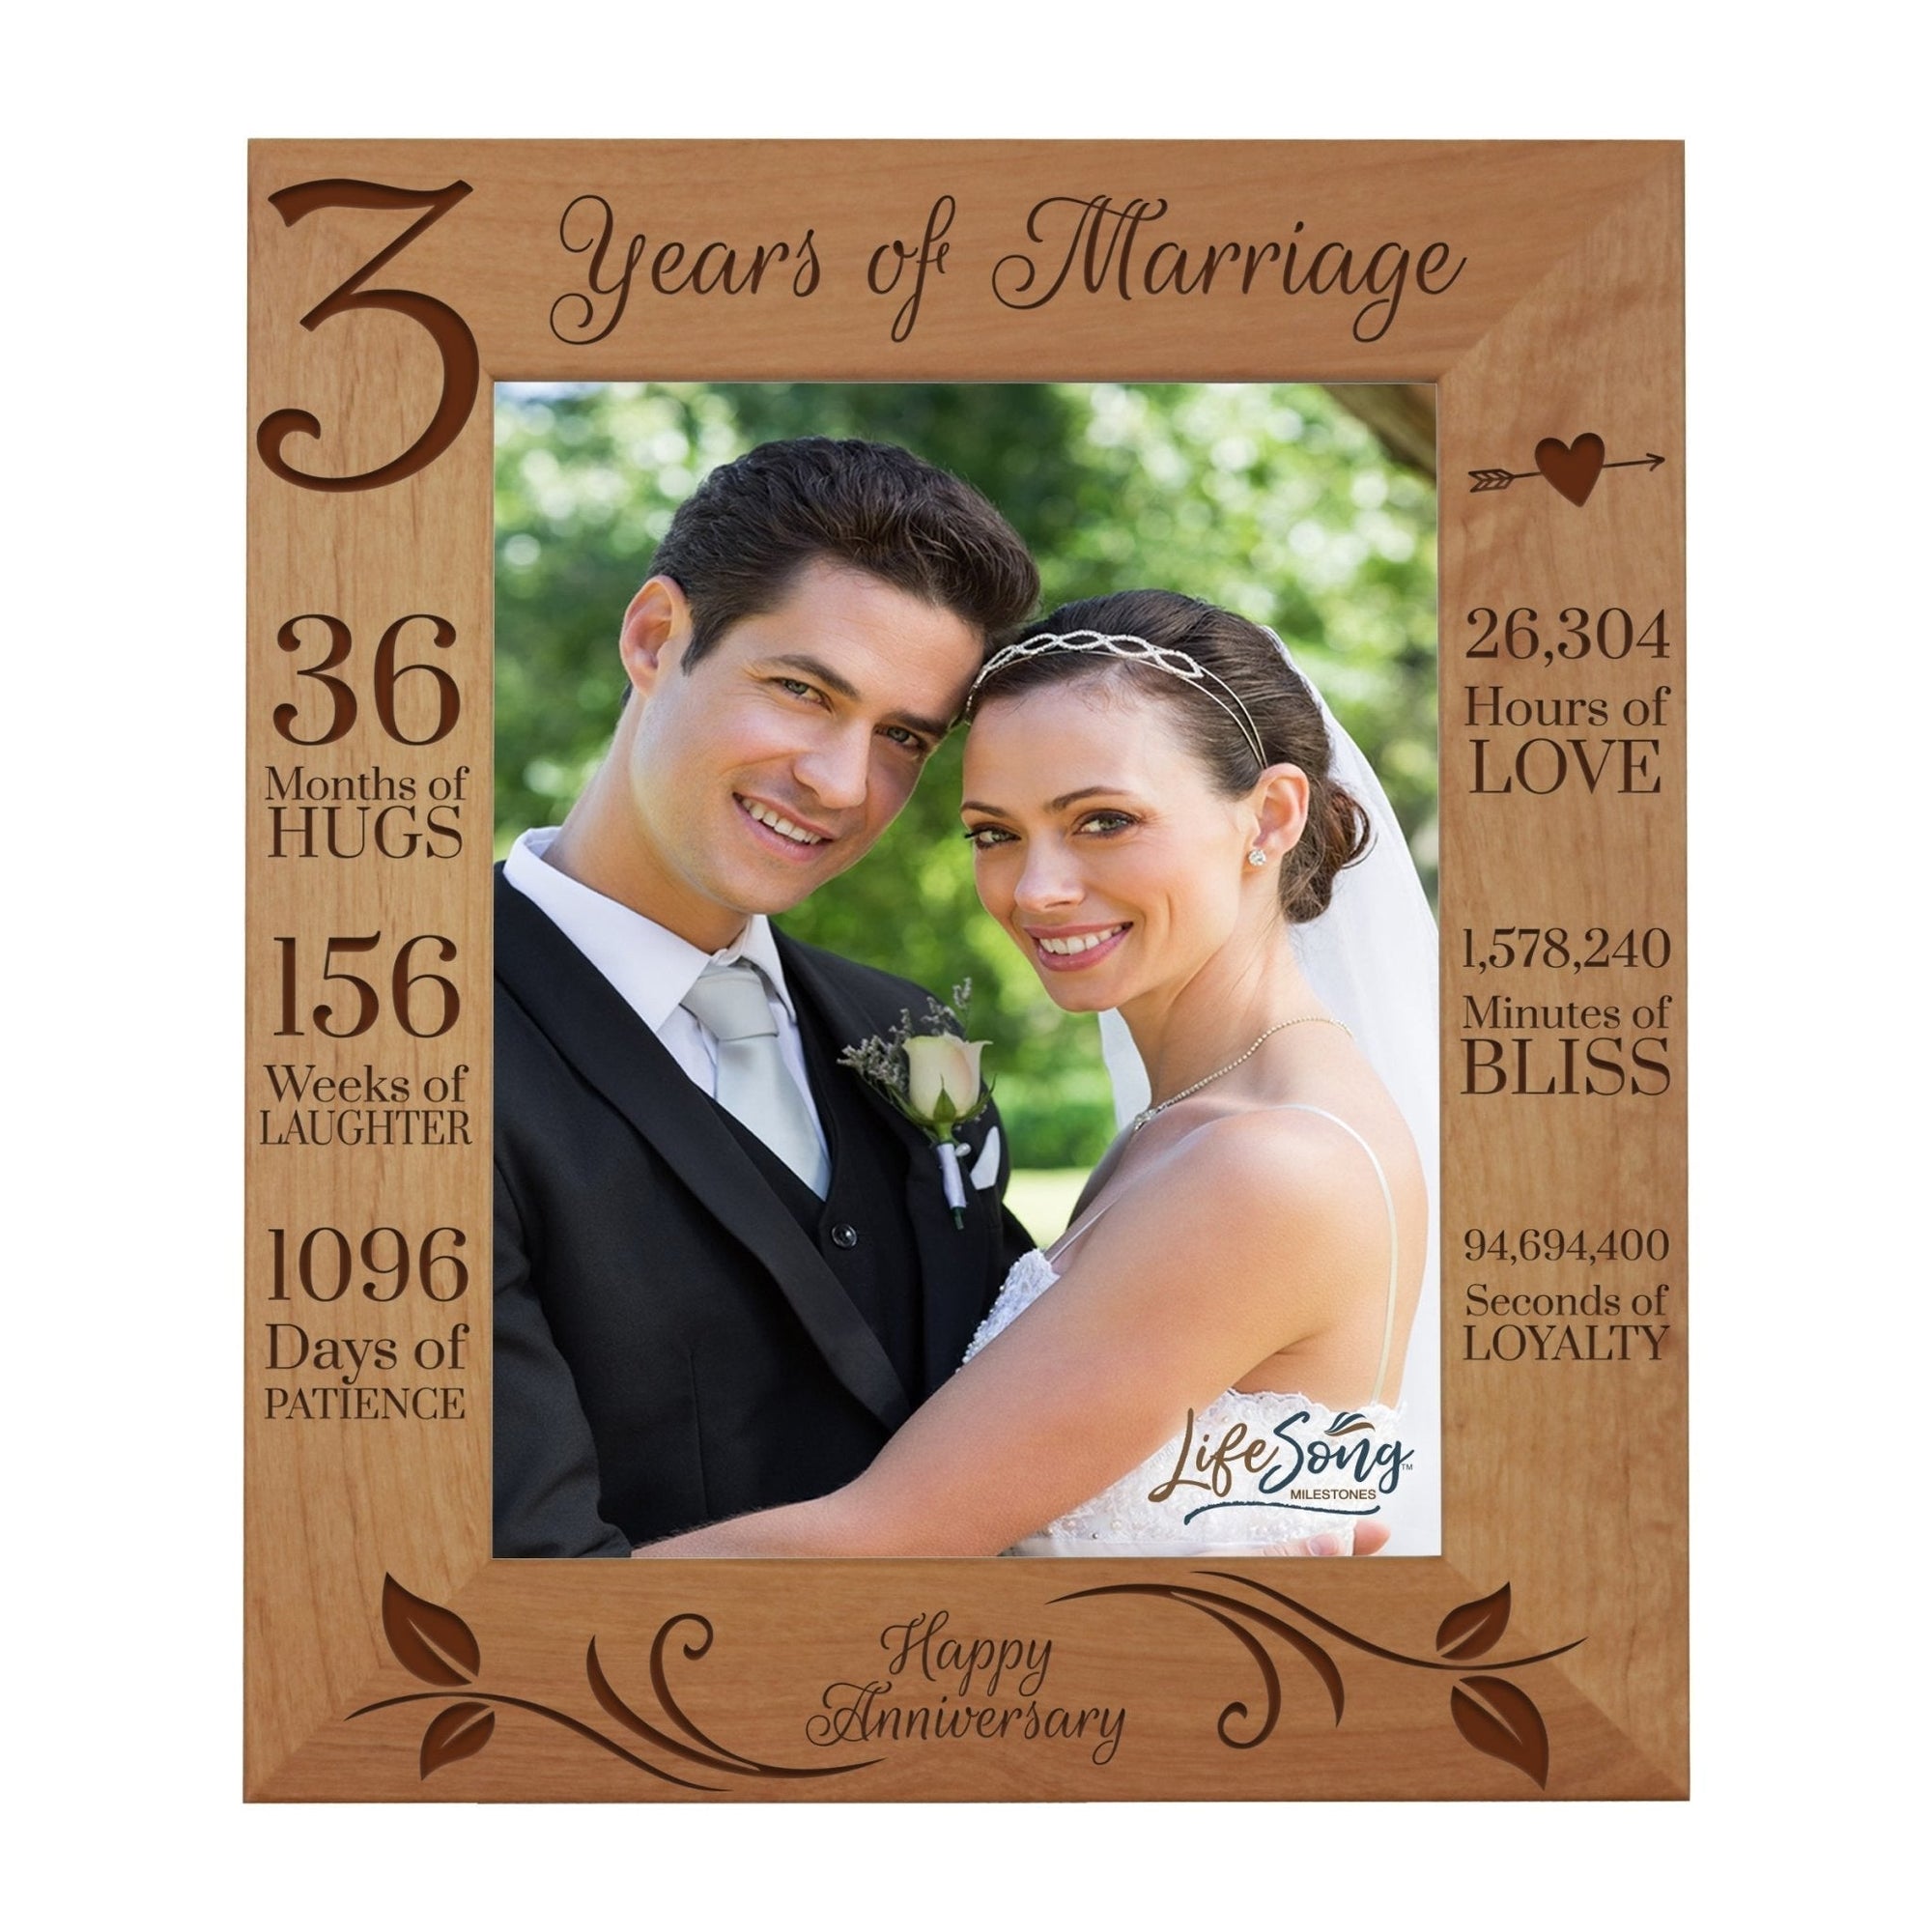 Couples 3rd Wedding Anniversary Photo Frame Home Decor Gift Ideas - Happy Anniversary - LifeSong Milestones